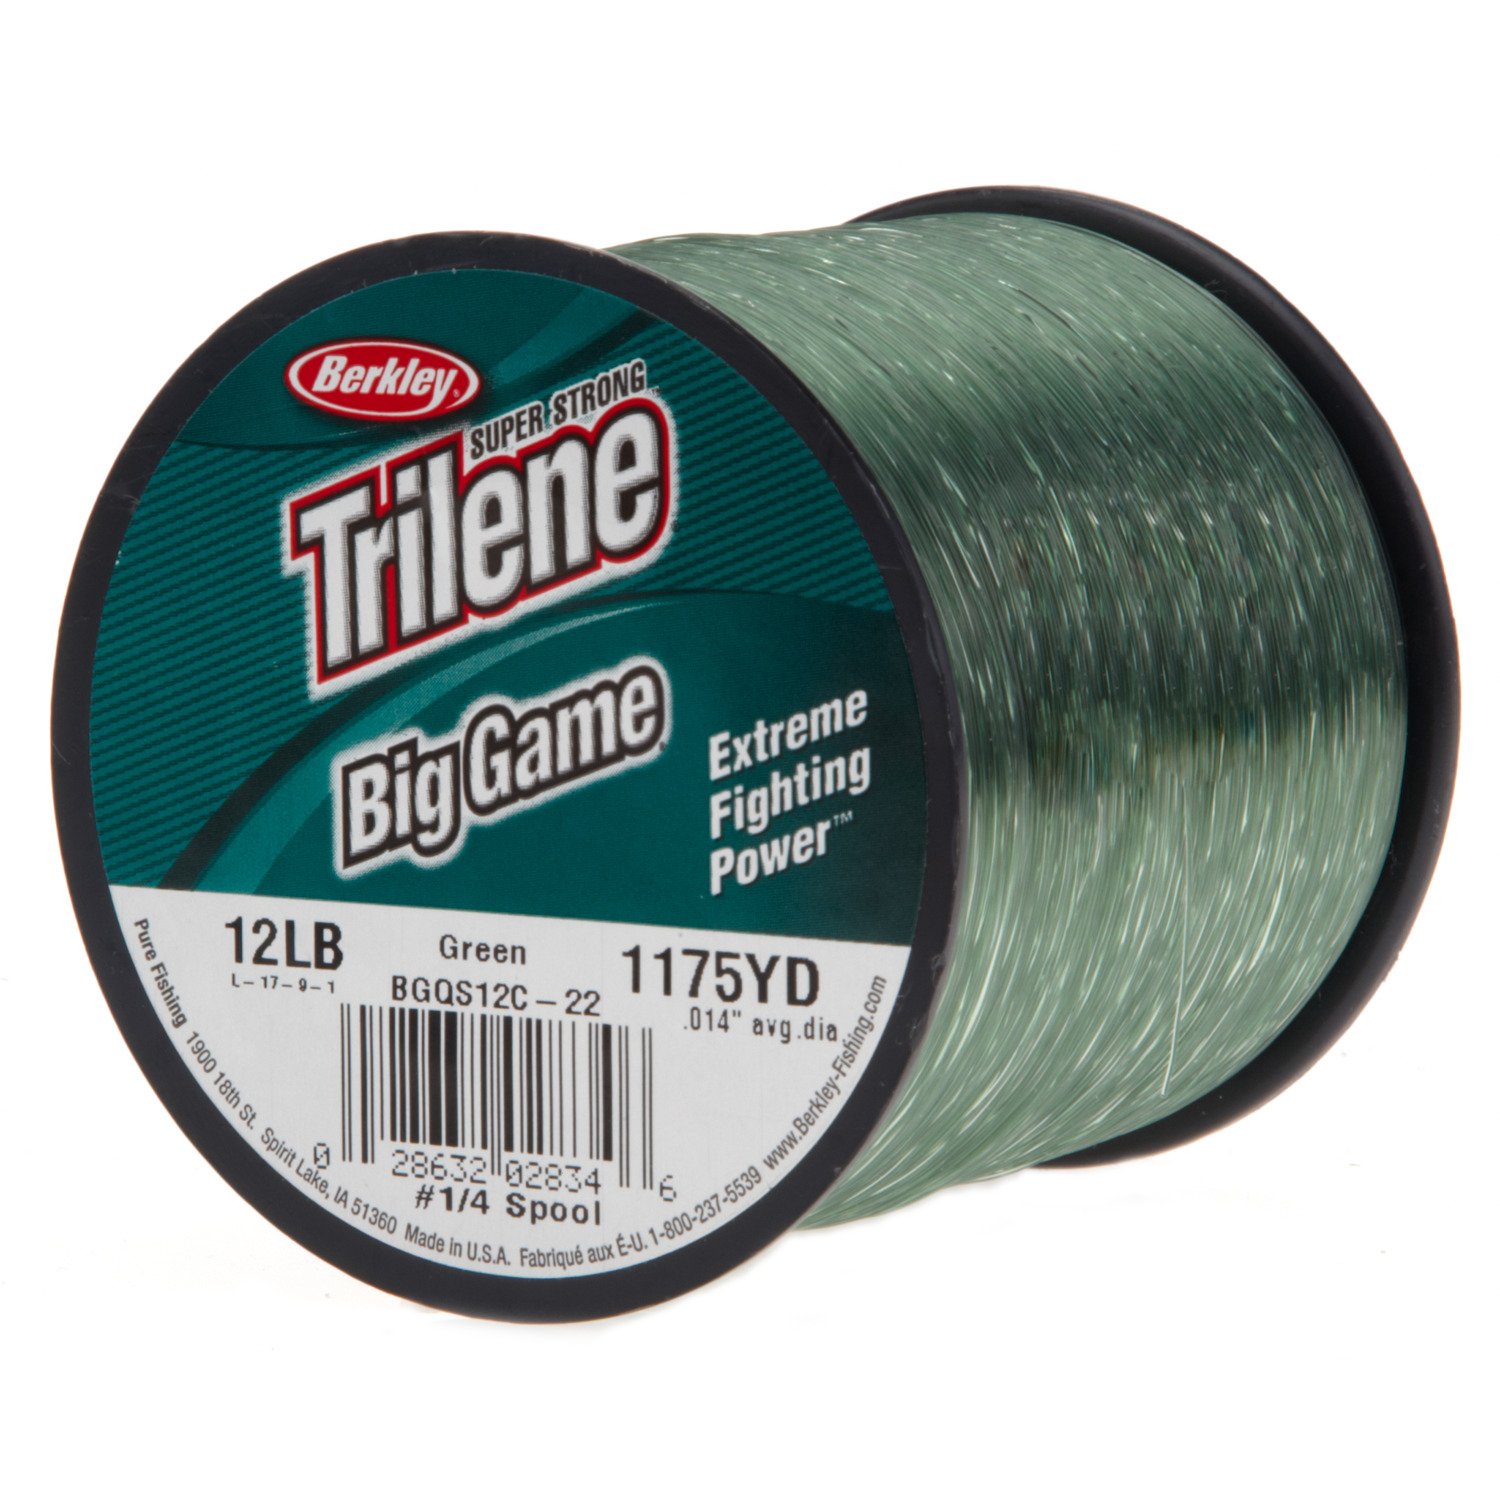 Berkley® Trilene® Big Game™ 1/4 lb. Fishing Line